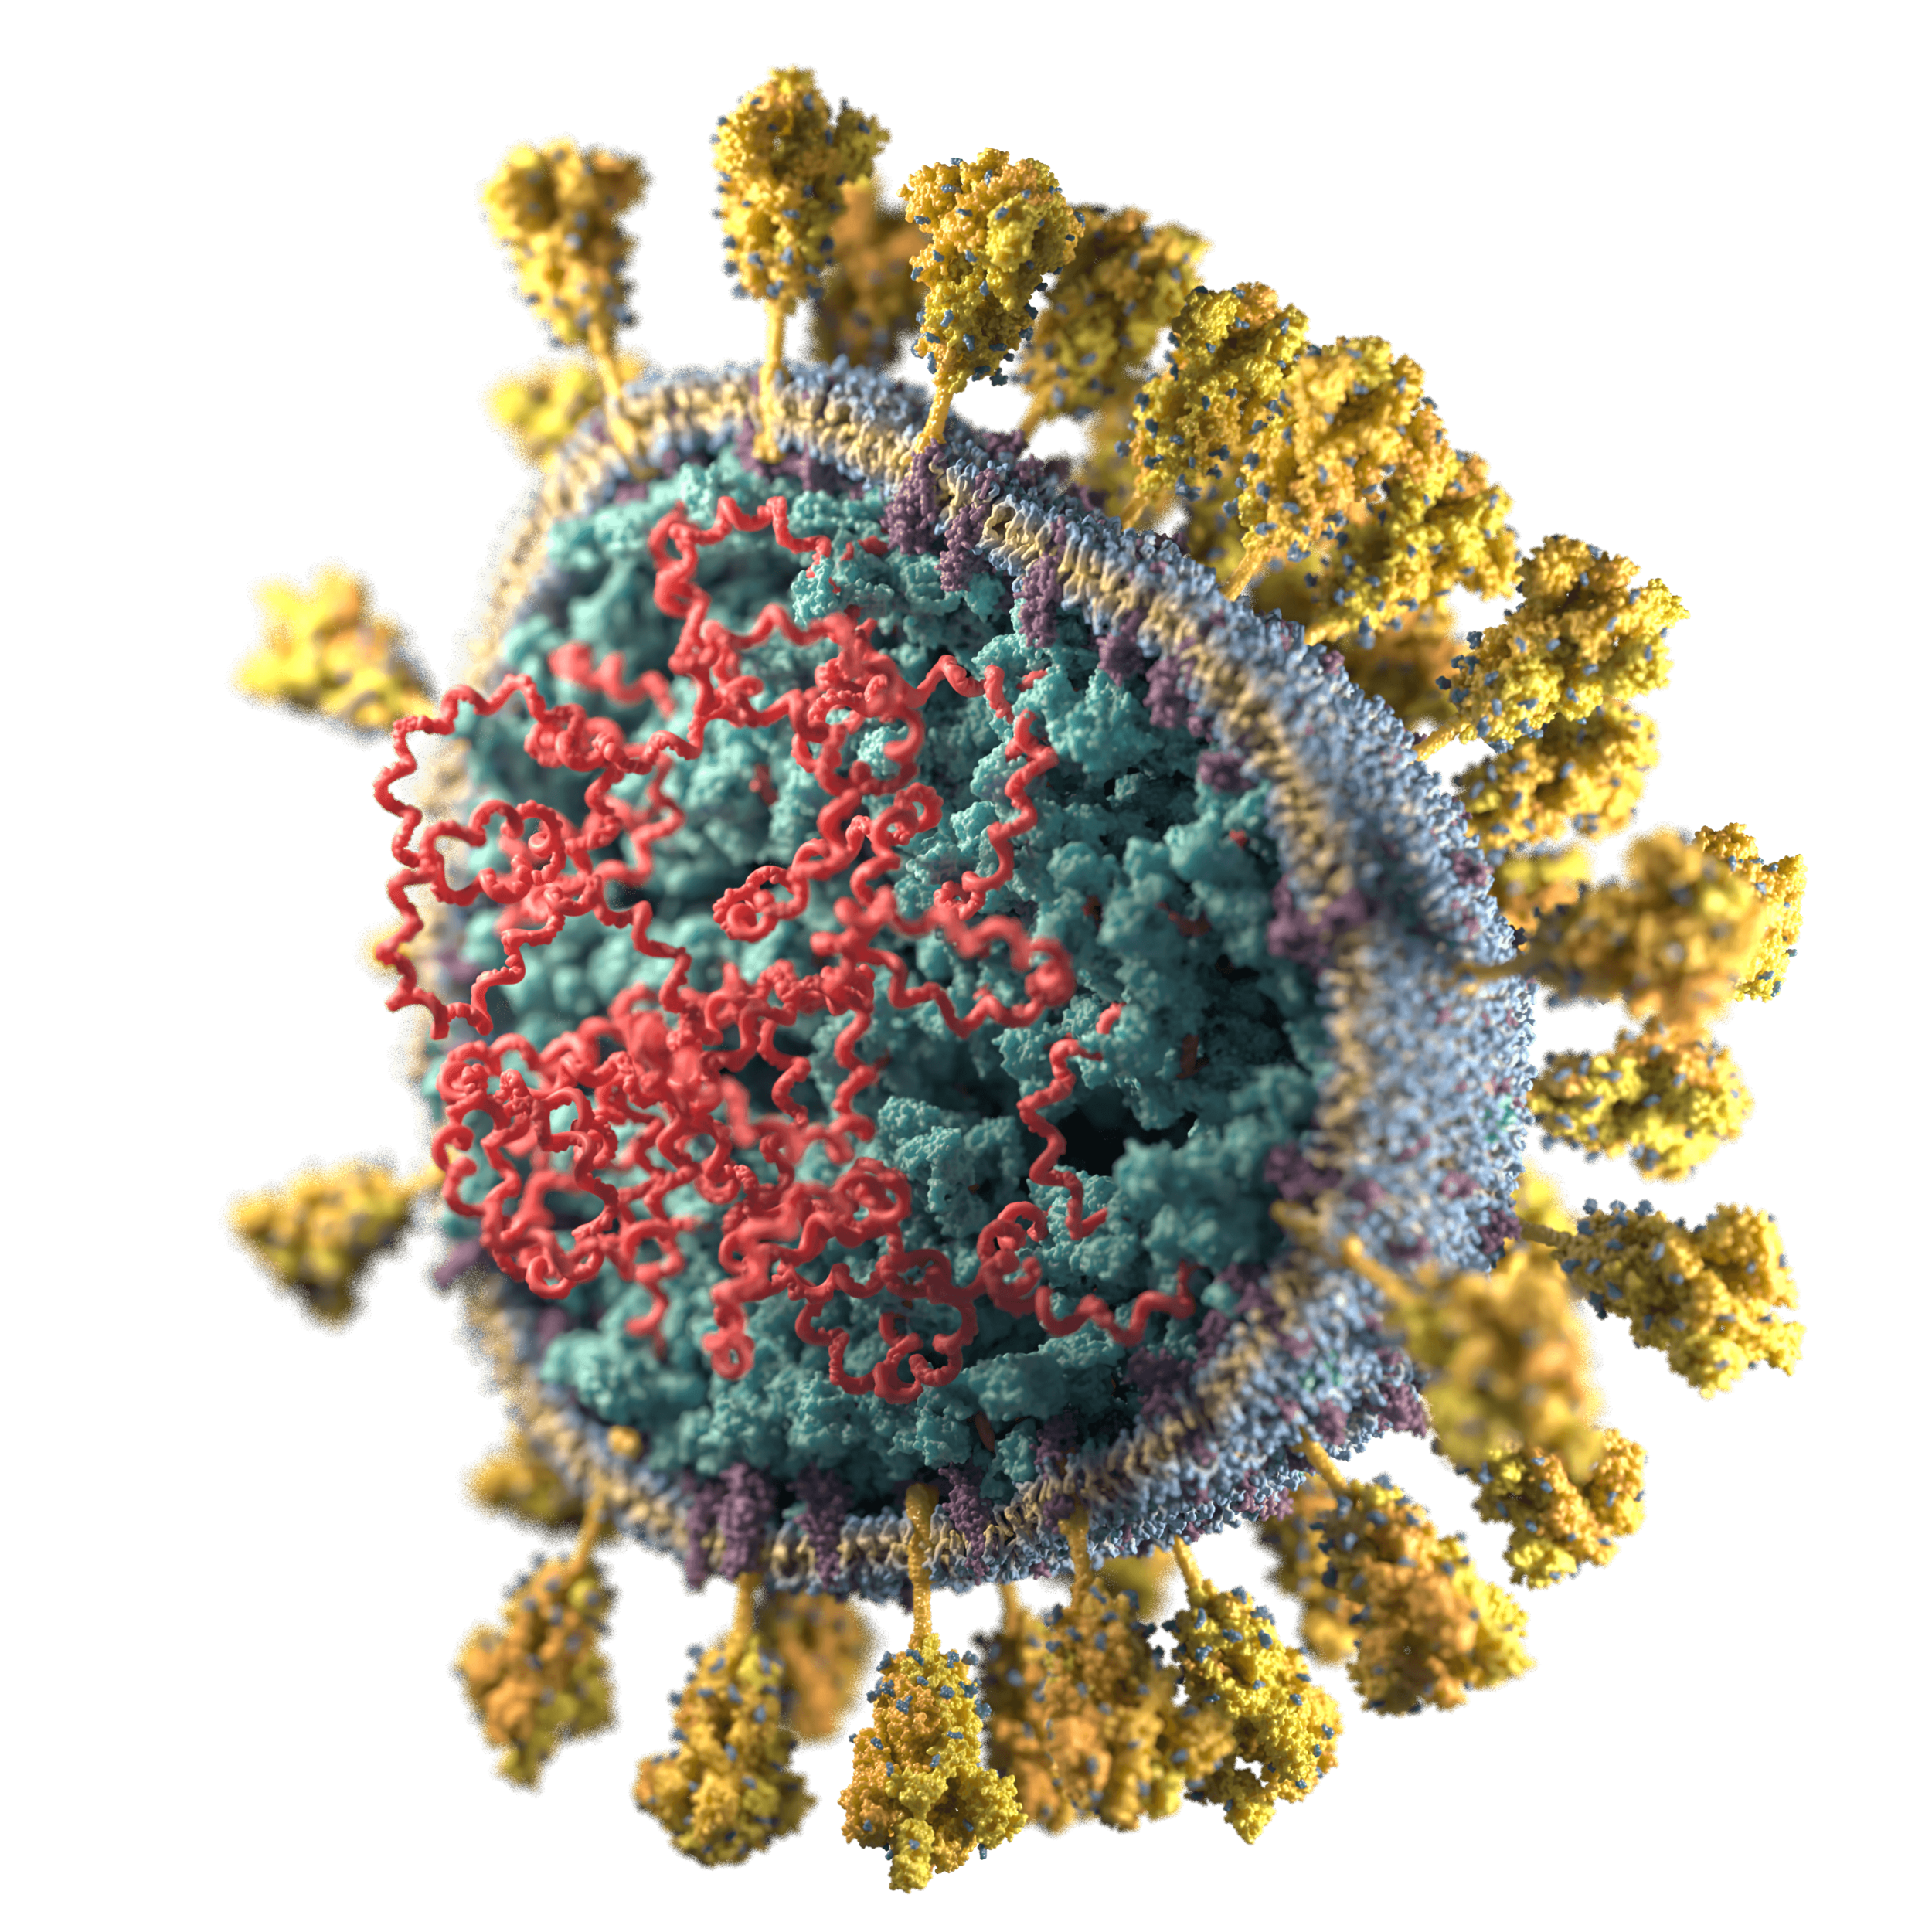 Ковид 2 вирус. Коронавирус SARS-cov-2. Вирус SARS-cov-2 под микроскопом. Коронавирус SARS. Штаммы коронавируса под микроскопом.